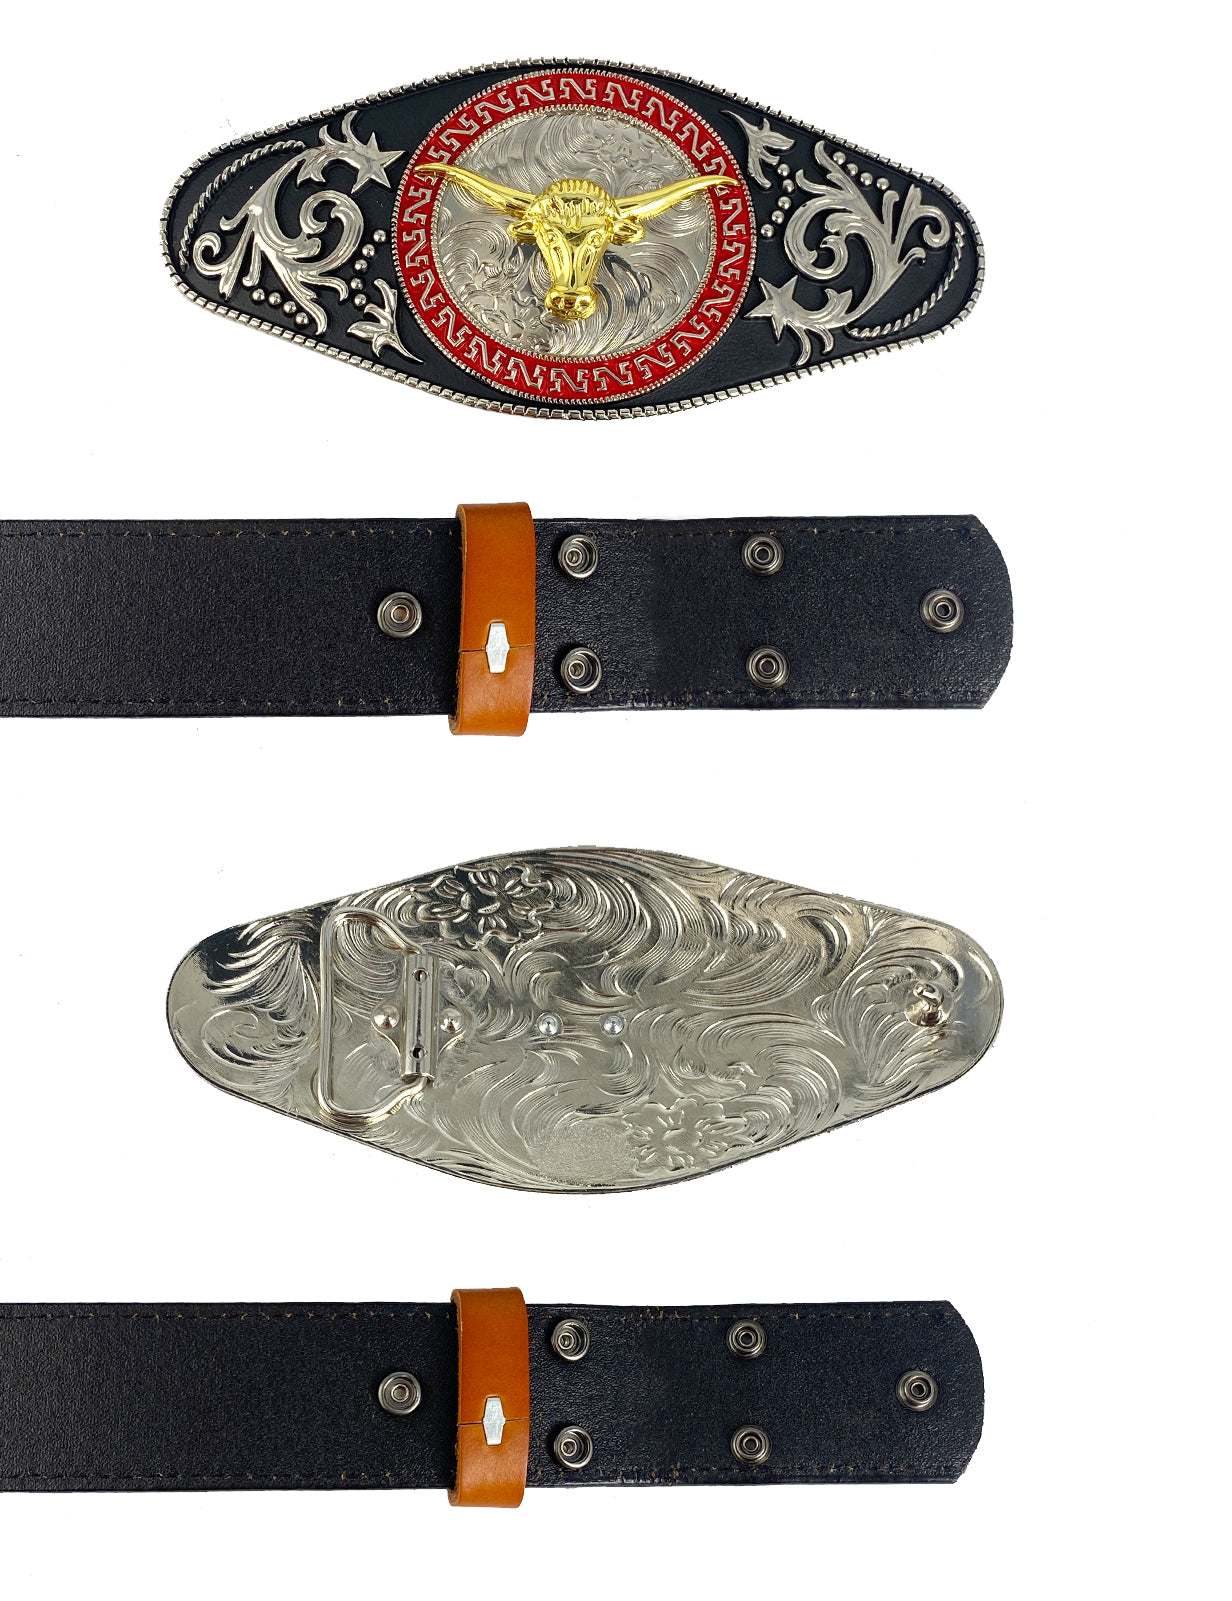 TOPACC Western Genuine Leather Pattern Tooled Belt - Rodeo Longhorn Bull Grabado Flor Cinturón Hebilla